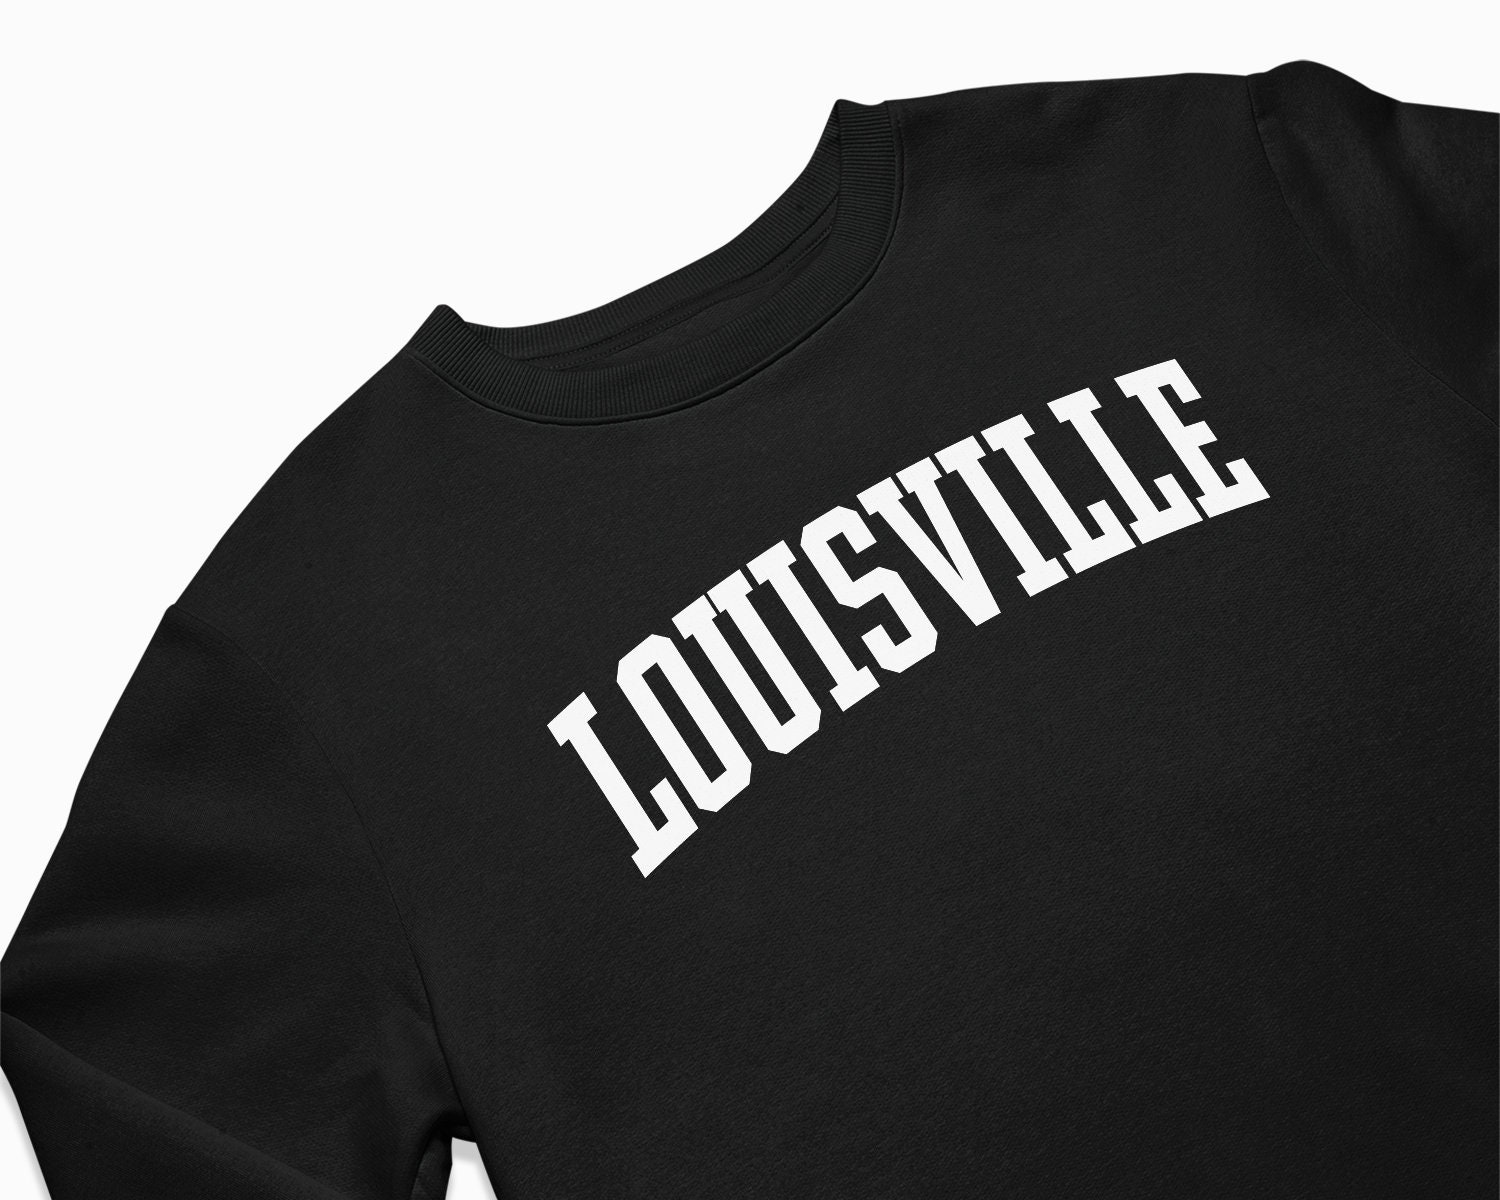 HappyNewVintageShop Louisville Sweatshirt: Louisville Kentucky Crewneck / College Style Sweatshirt / Vintage Inspired Sweater